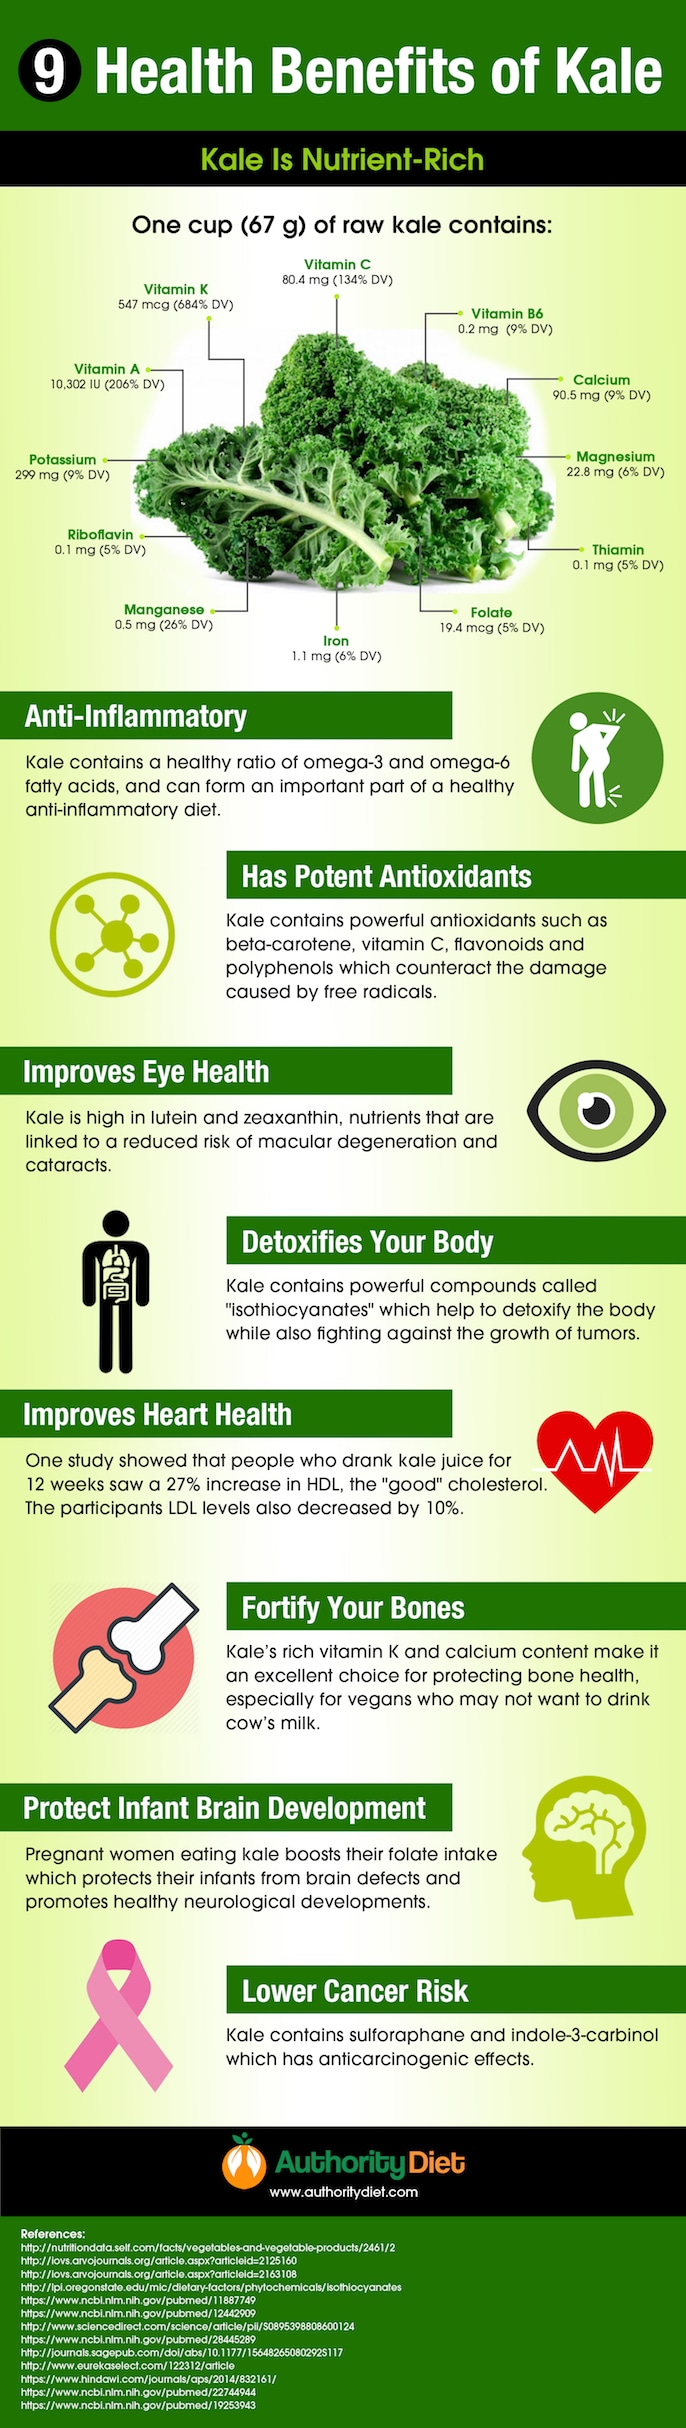 kale benefits infographic